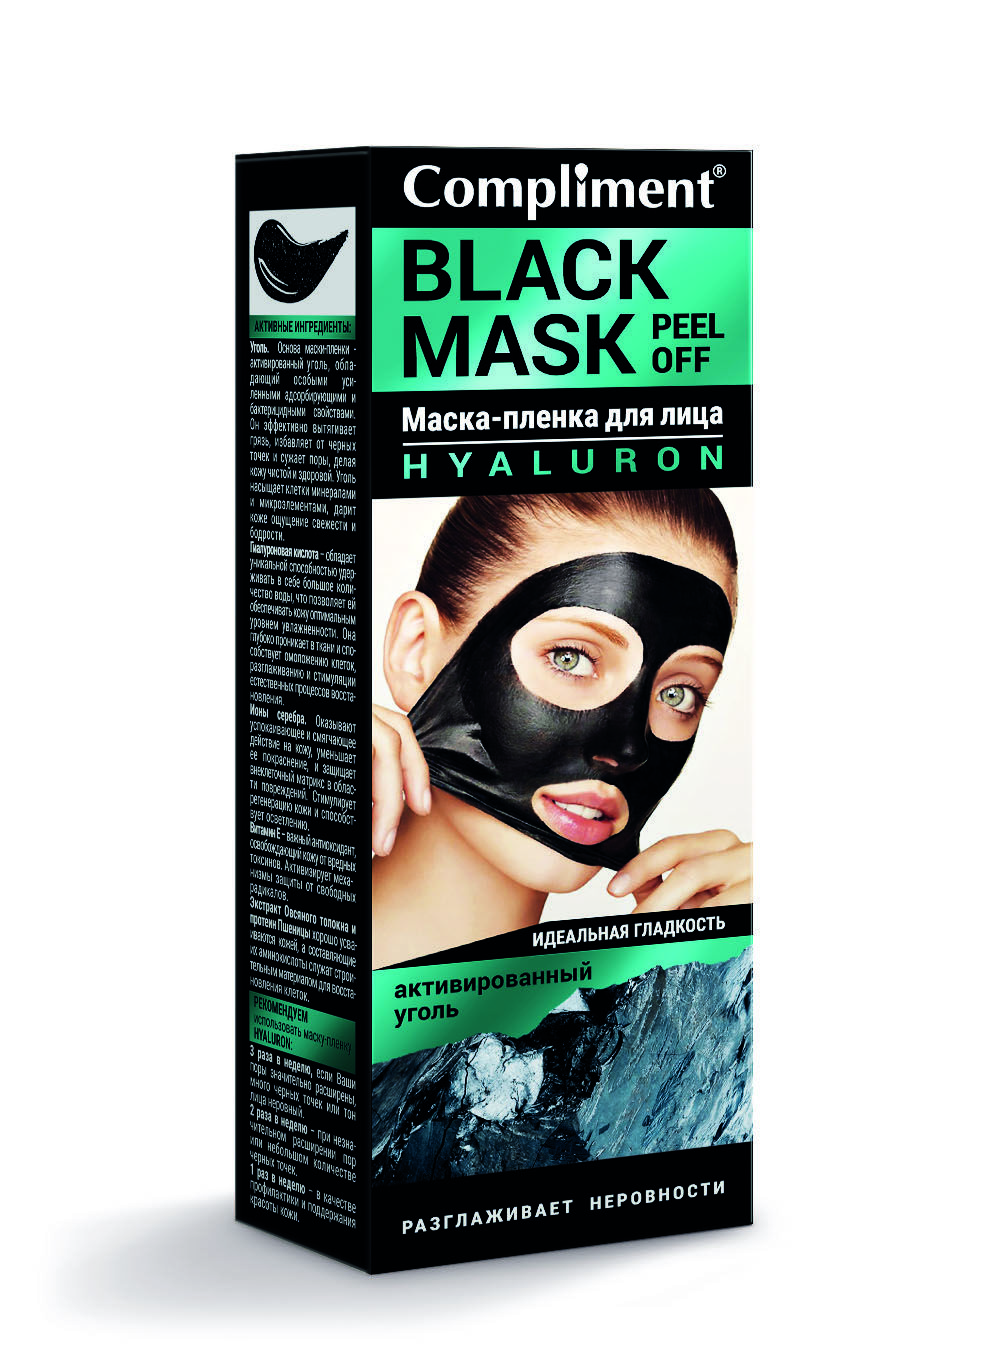 Купить маску compliment. Compliment Black Mask маска-пленка для лица Pro-Collagen 80мл 80 мл. Compliment Black Mask маска-пленка для лица Pro-Collagen 80мл. Compliment Black Mask маска-пленка для лица коллаген, 80 мл. Compliment Black Mask маска-пленка для лица co-Enzymes 80мл.